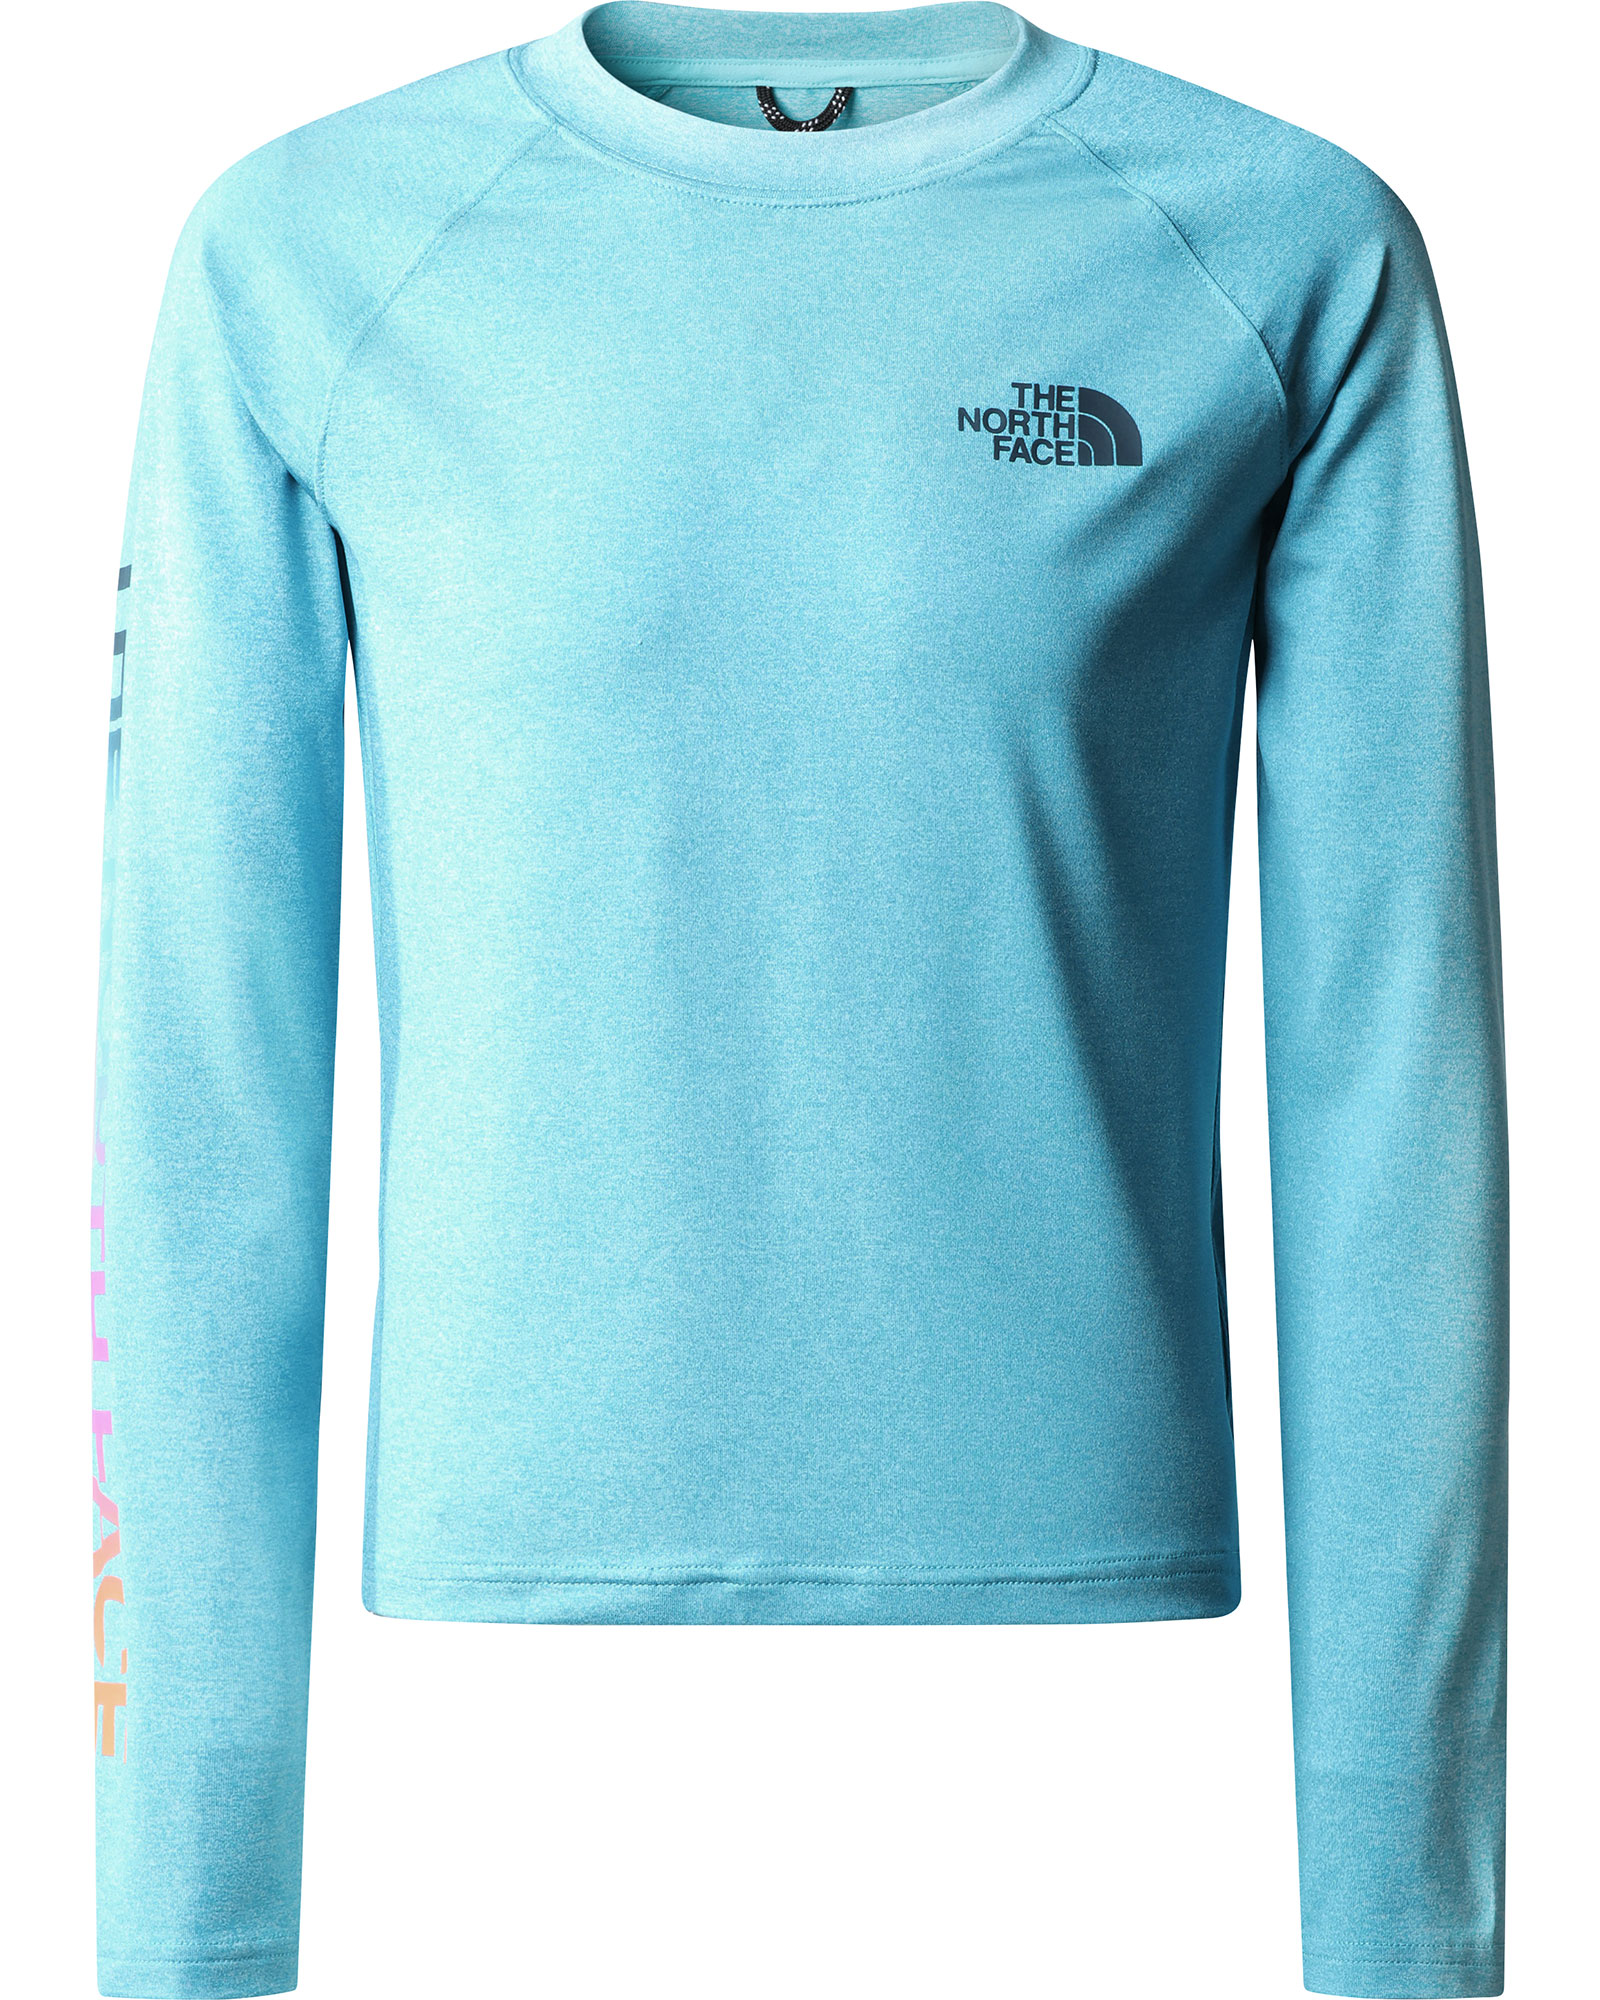 The North Face Girl’s Amphibious Long Sleeved Sun T Shirt - Scuba Blue S